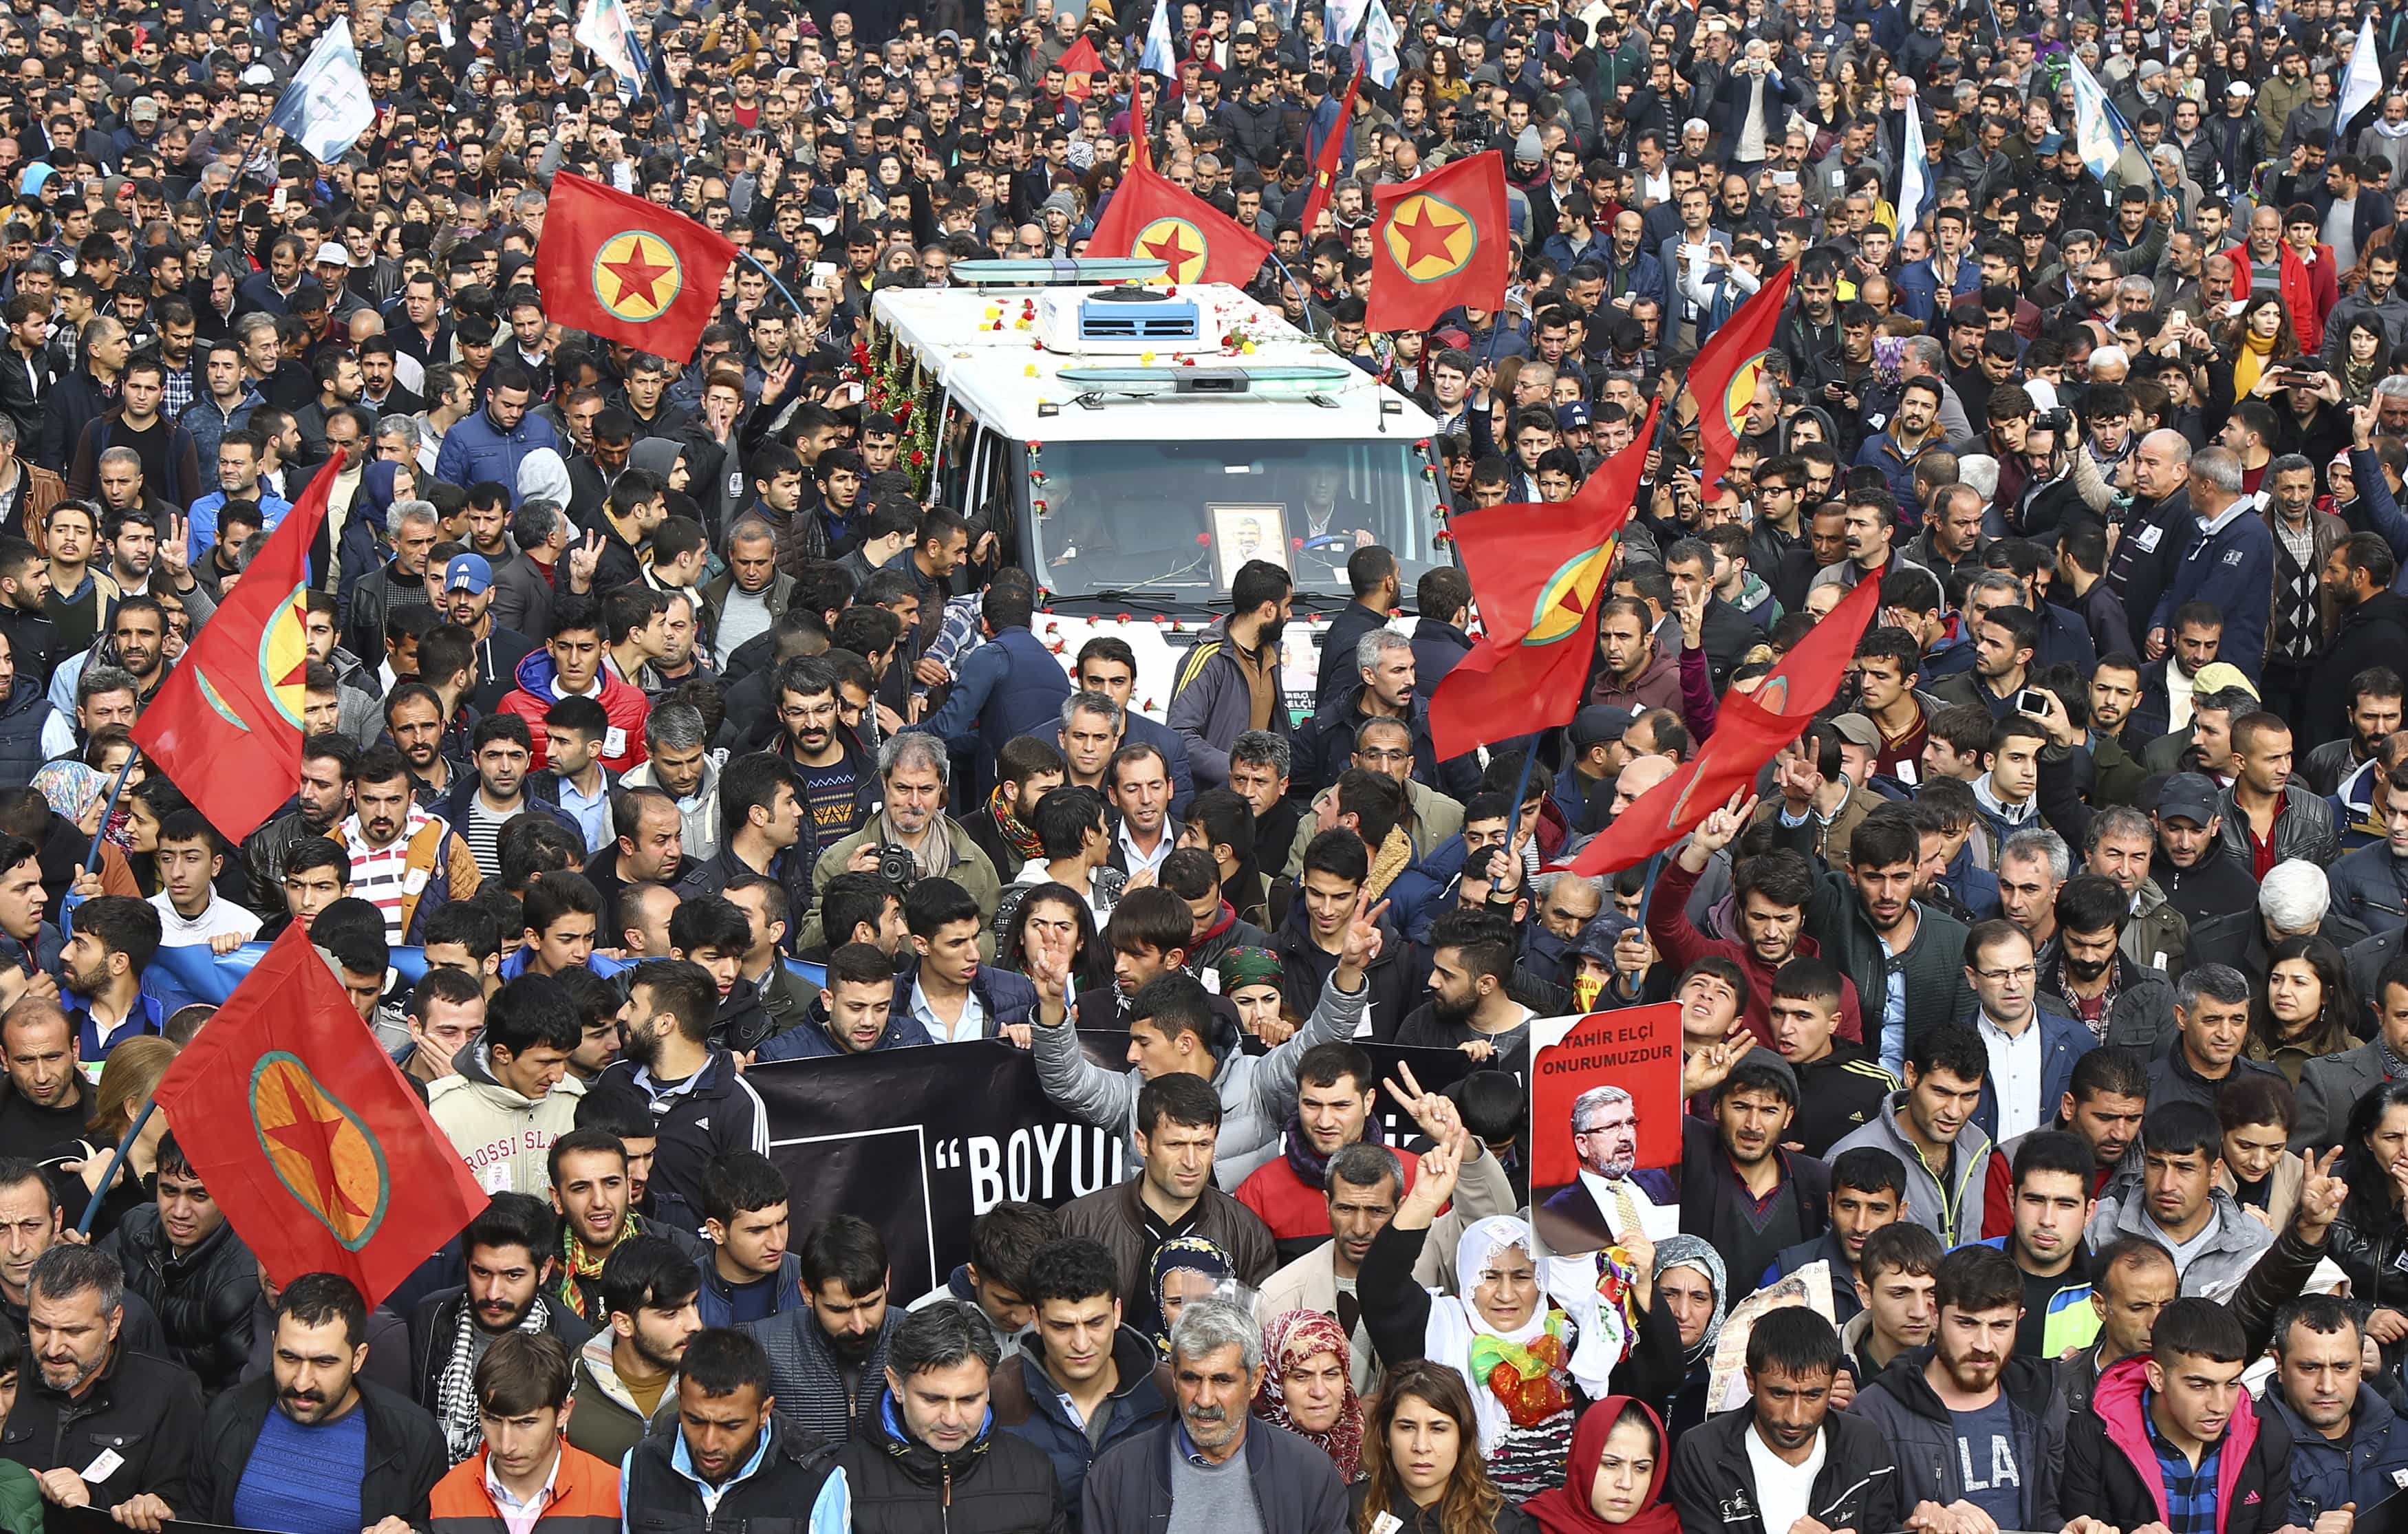 People march as they surround the vehicle carrying the coffin of Diyarbakir Bar Association President Tahir Elci during his funeral in Diyarbakir, Turkey, 29 November 2015, REUTERS/Sertac Kayar